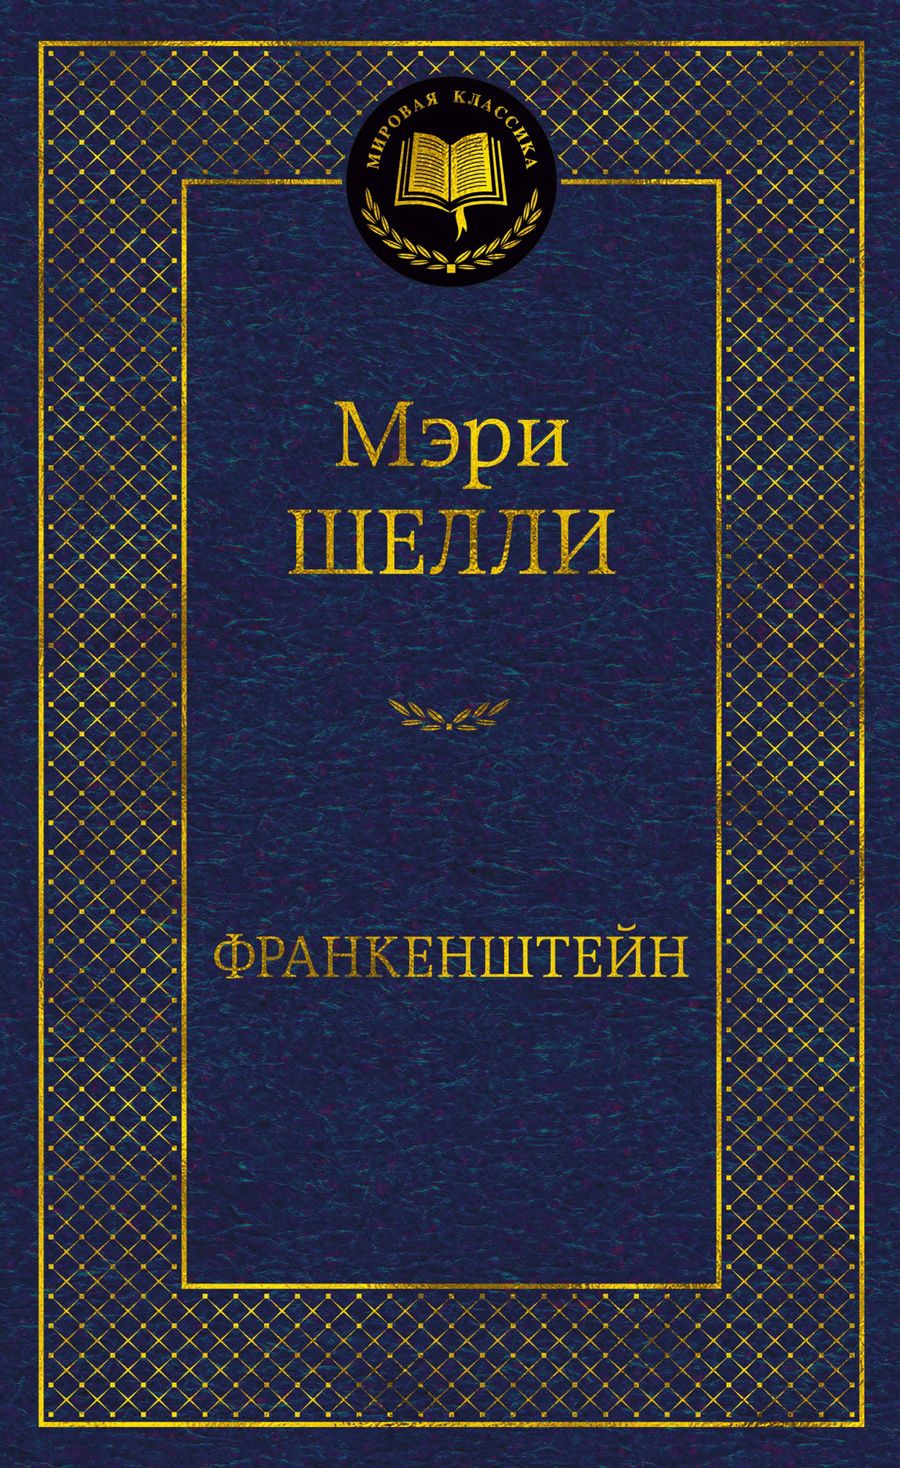 Обложка книги "Шелли: Франкенштейн"